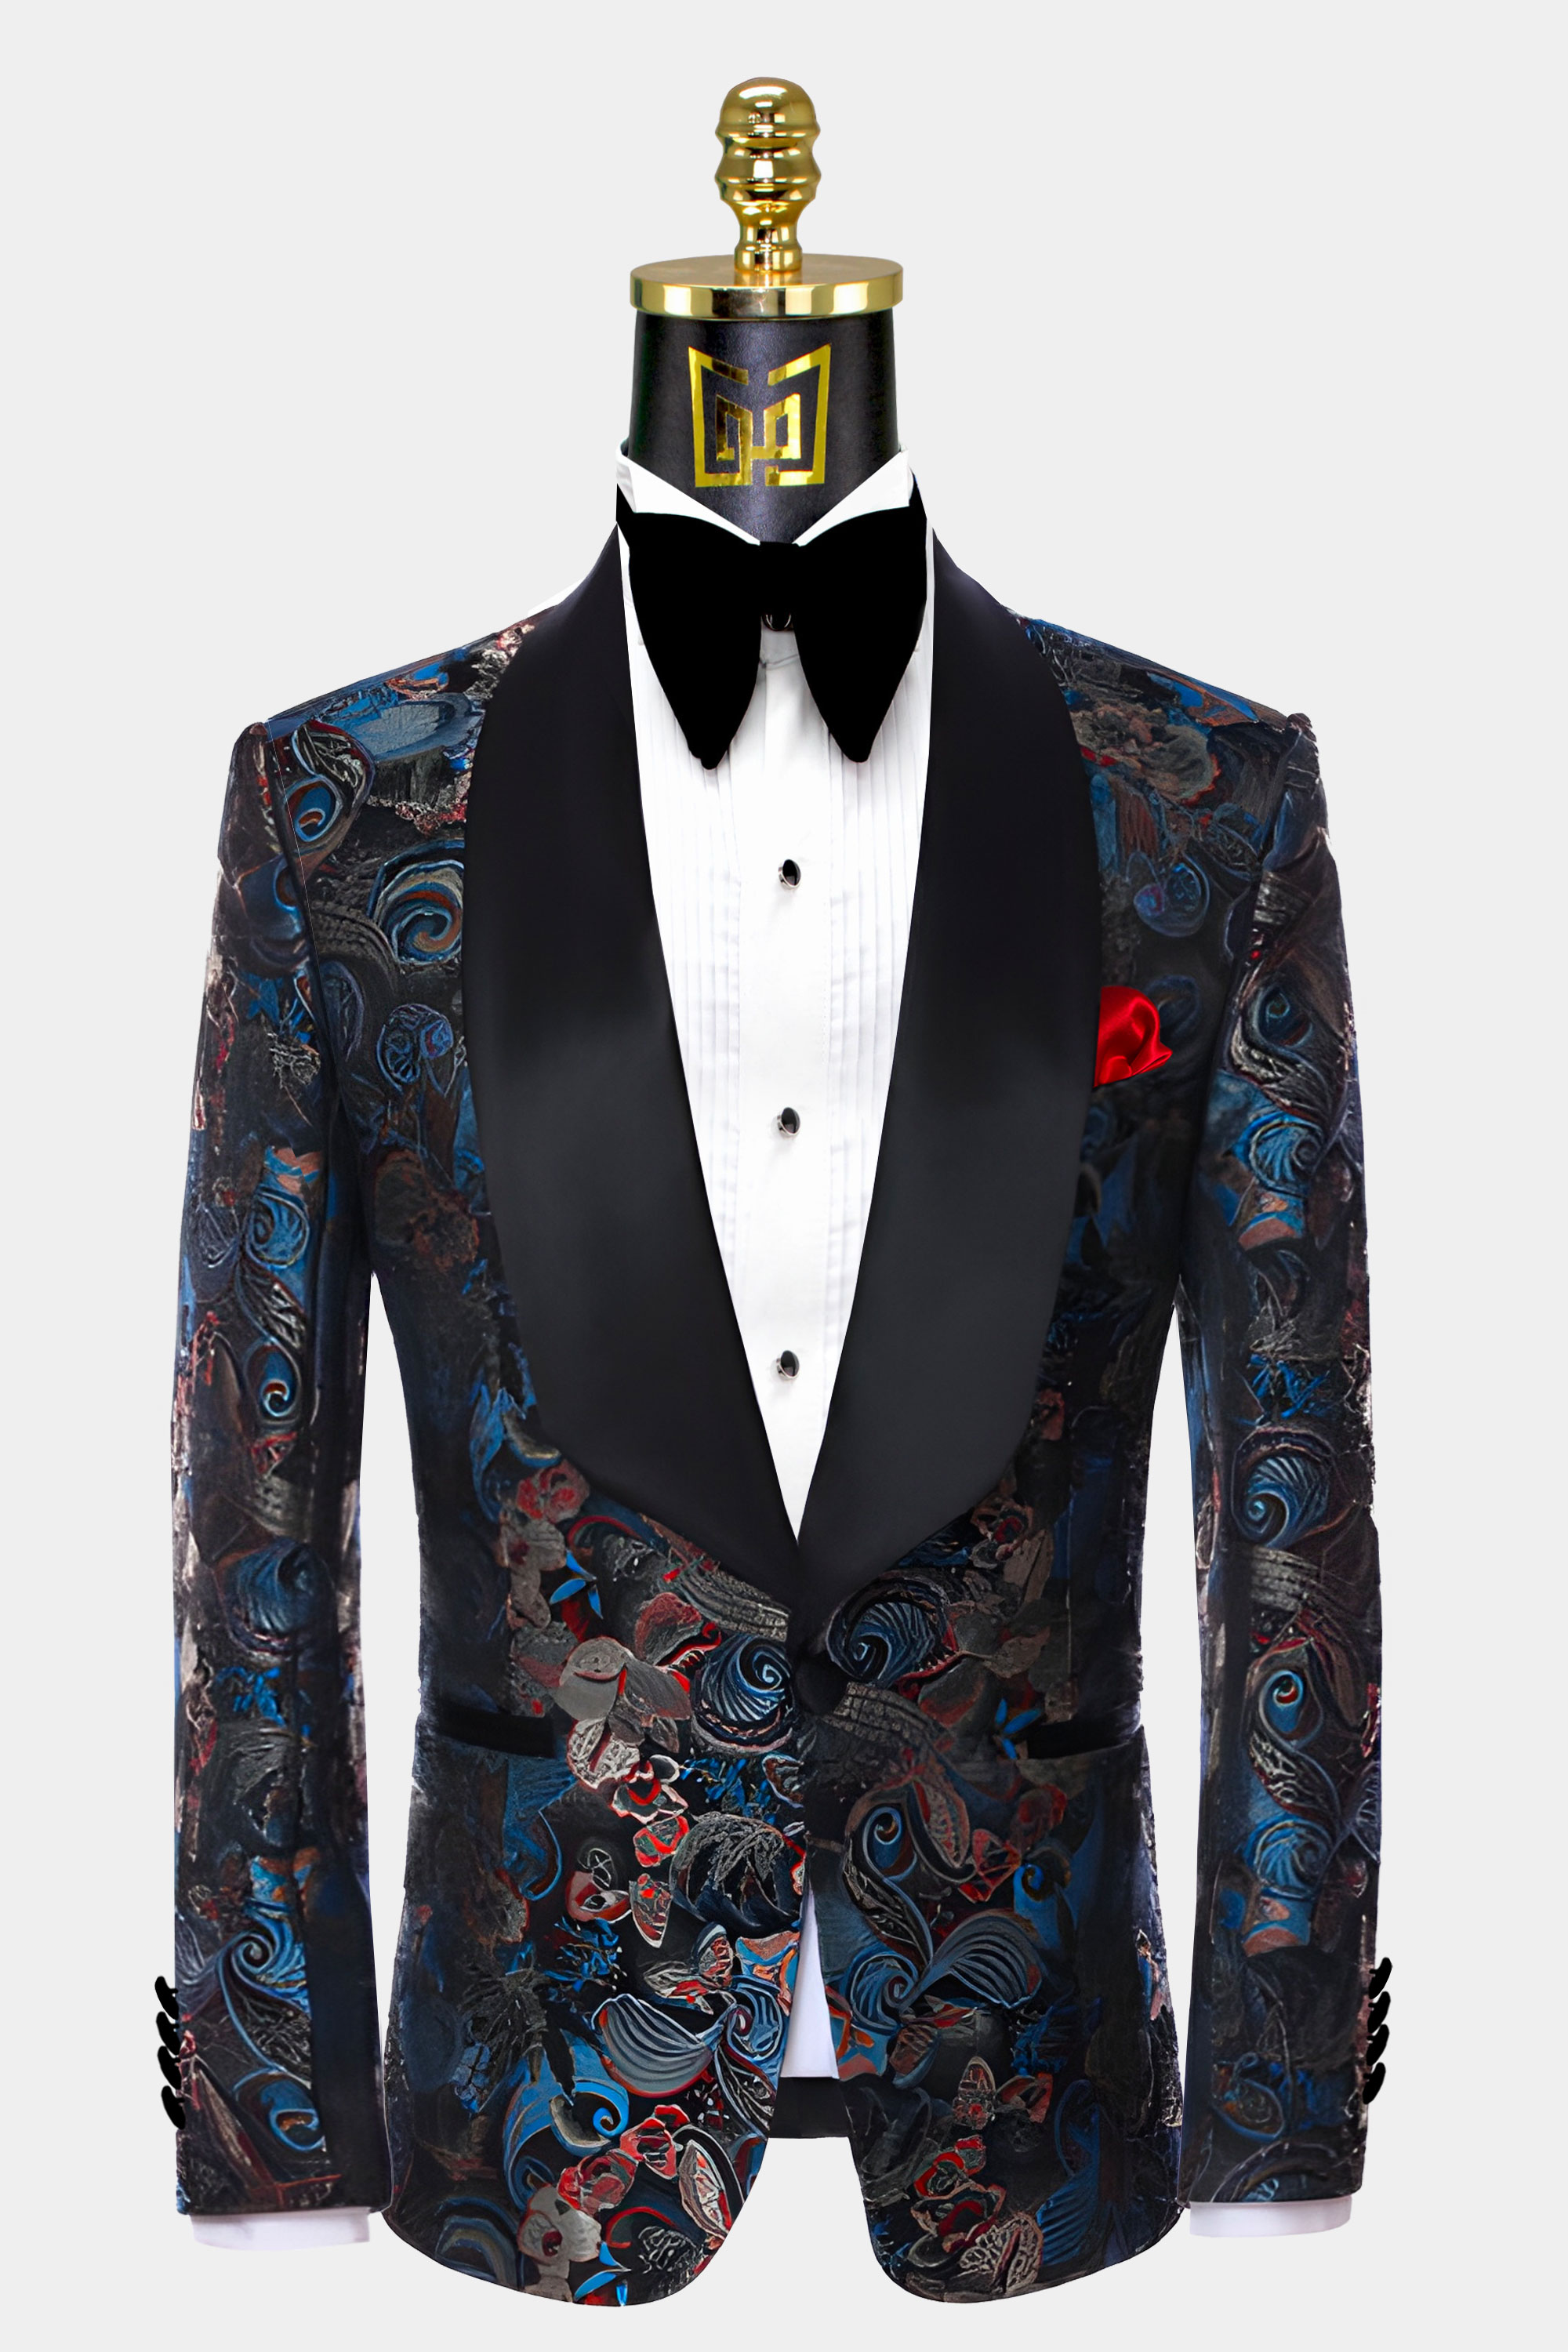 Embroidered-Tuxedo-Jacket-from-Gentlemansguru.com